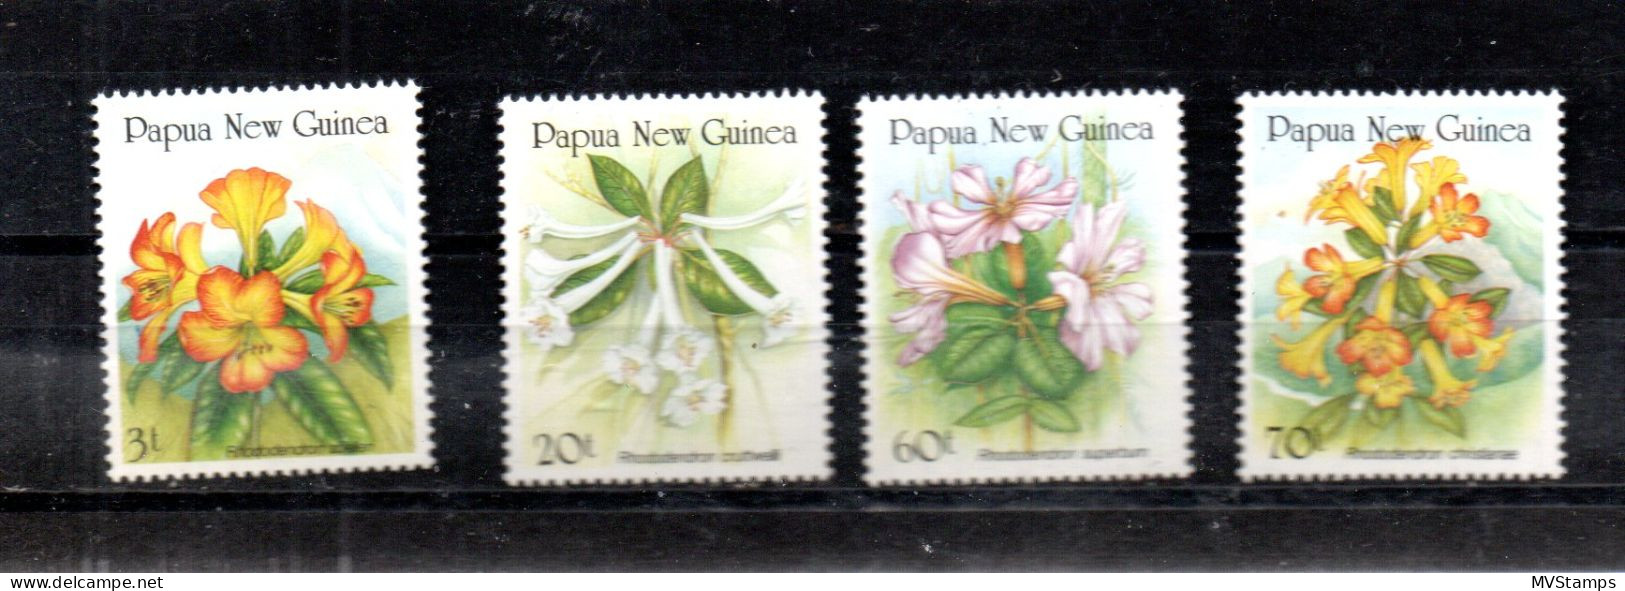 Papua Neuguinea 1989 Satz 584/87 Flowers/Rhododendren/Flora Postfrisch/MNH - Papua New Guinea